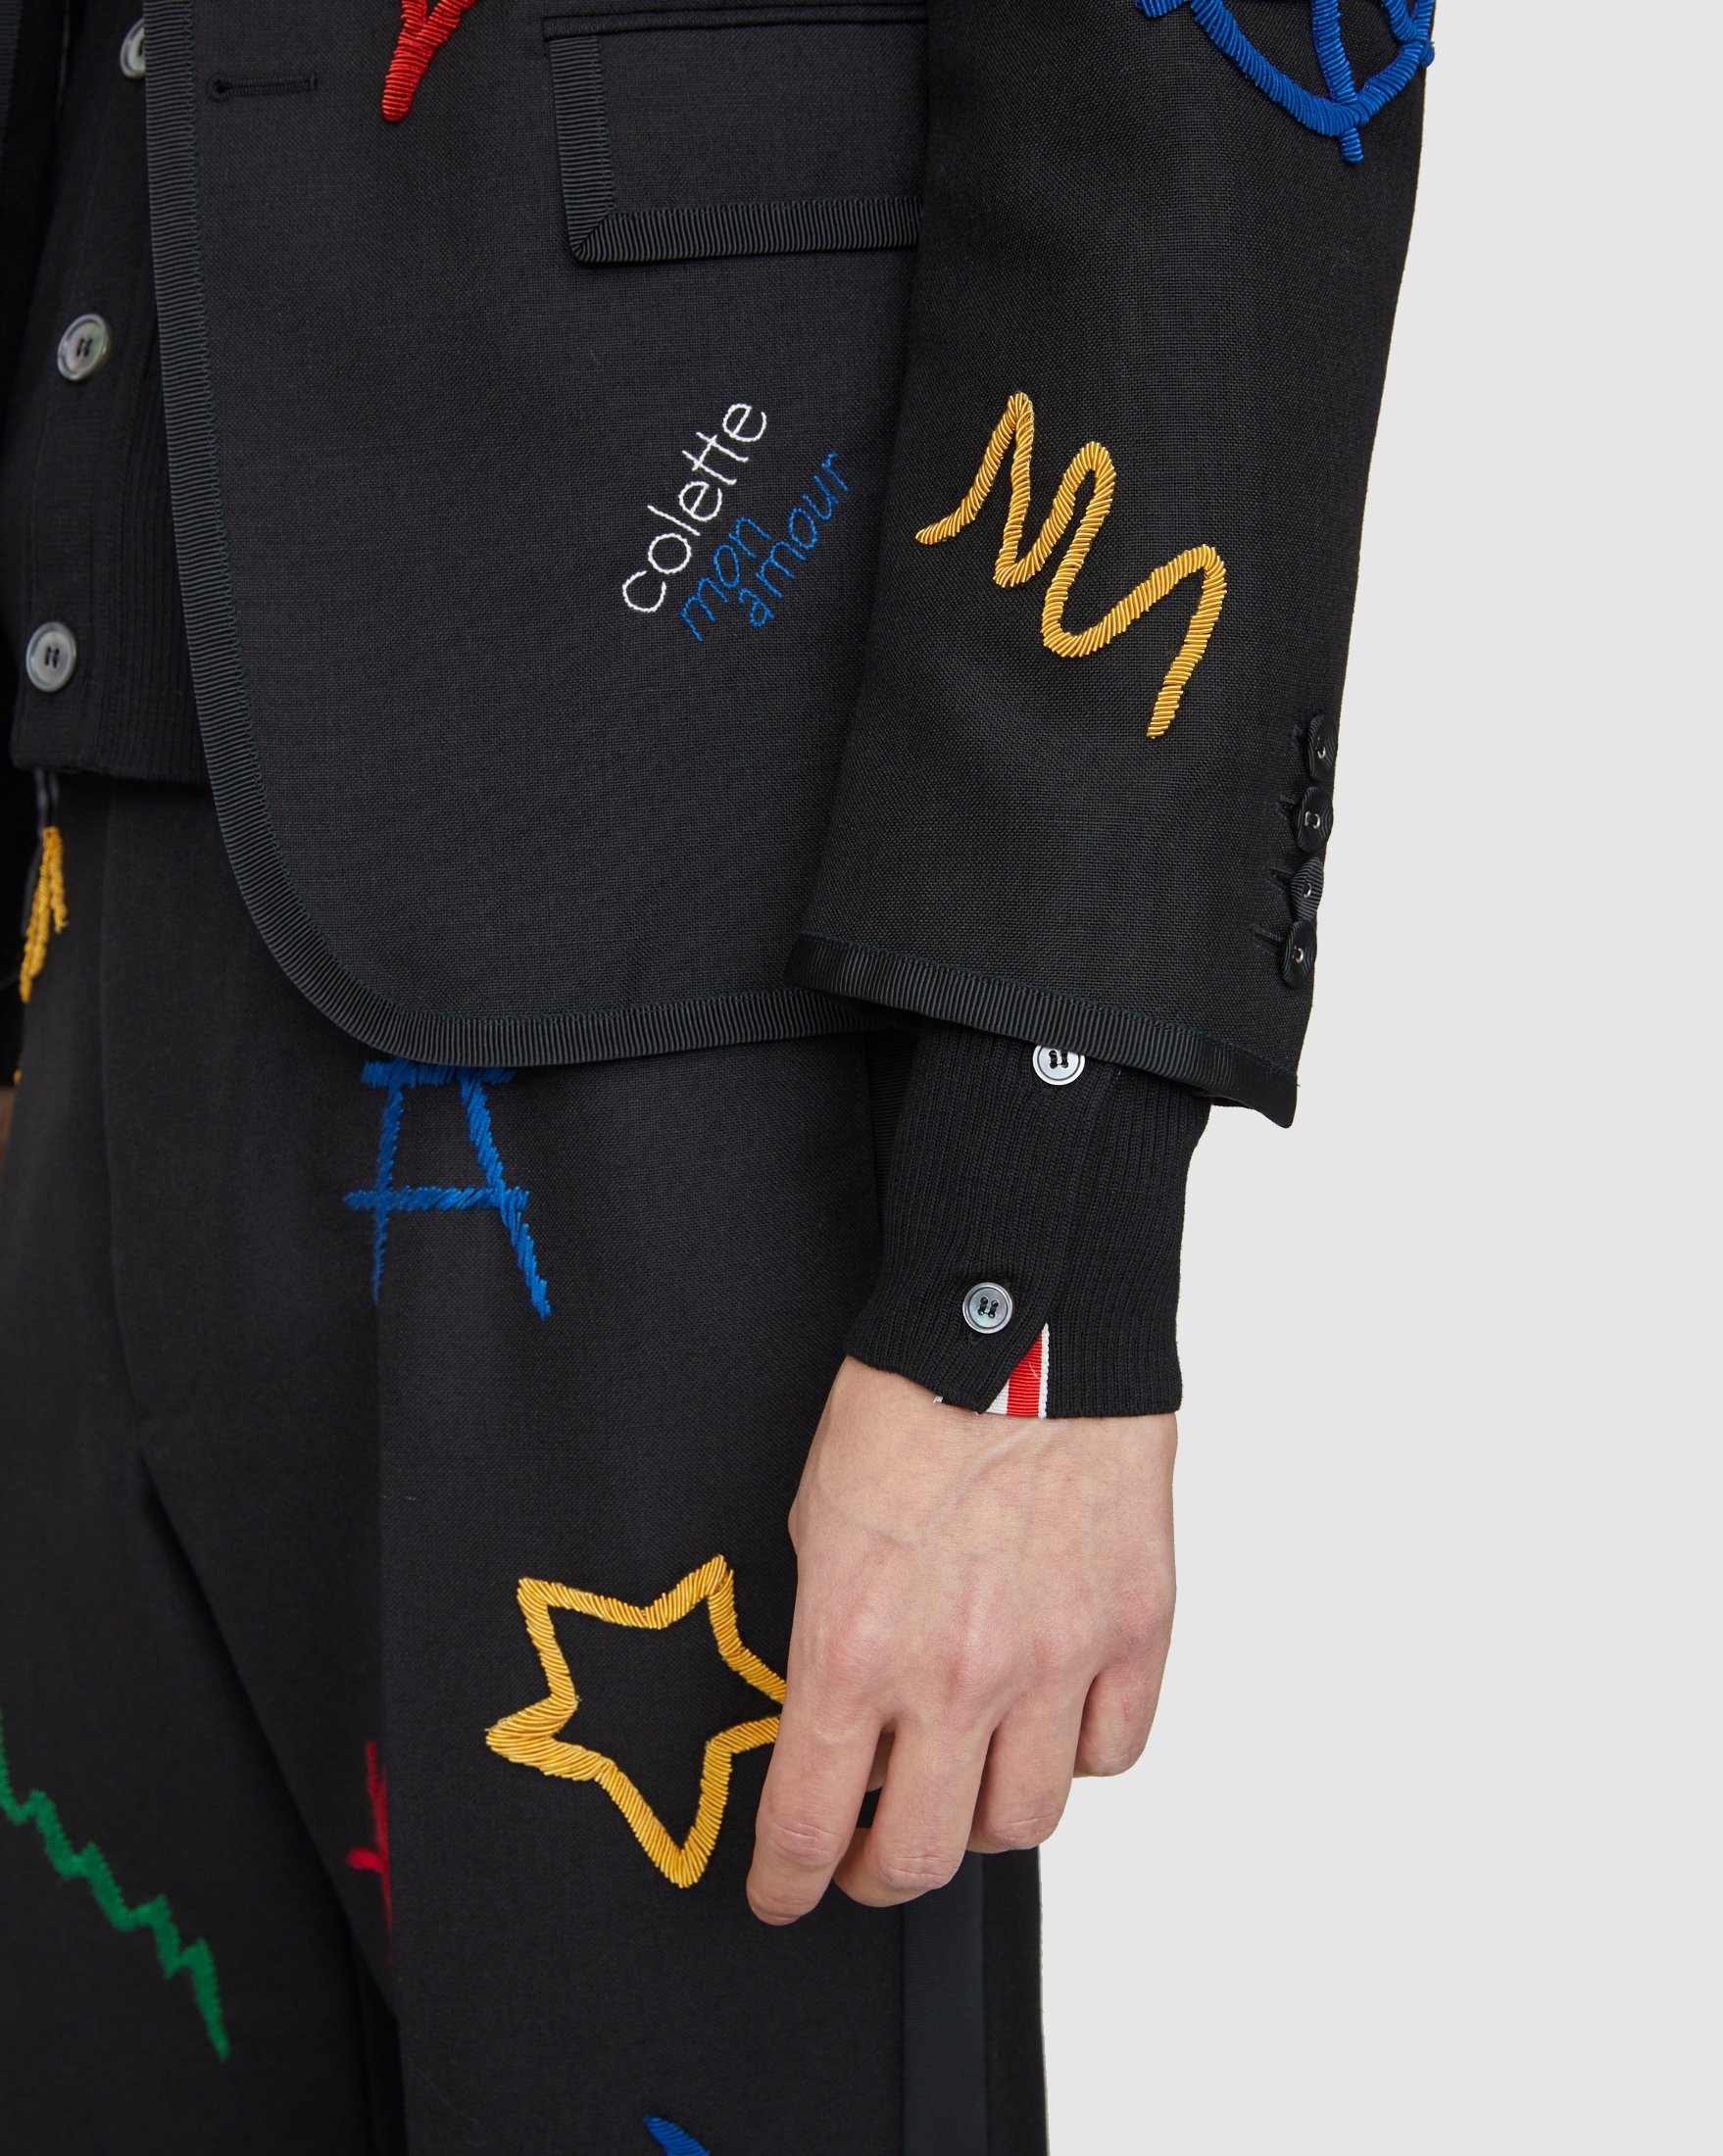 Colette Mon Amour x Thom Browne – Black Embroidered Tux Suit - Suits - Grey - Image 11